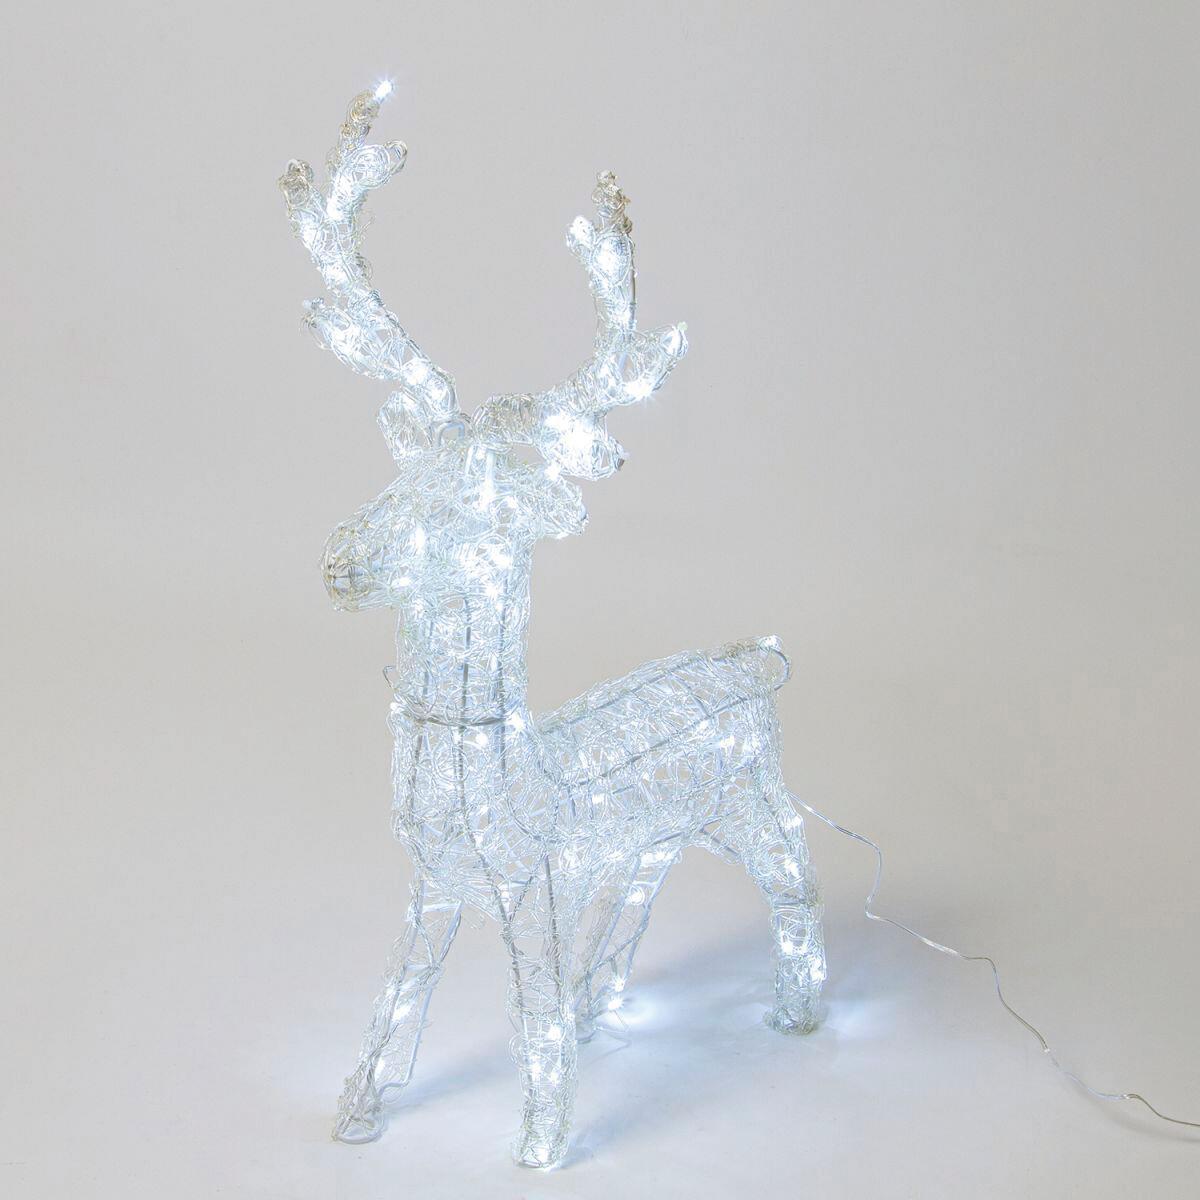 Renna 3D 100 lampadine bianco freddo H 60 cm - 2